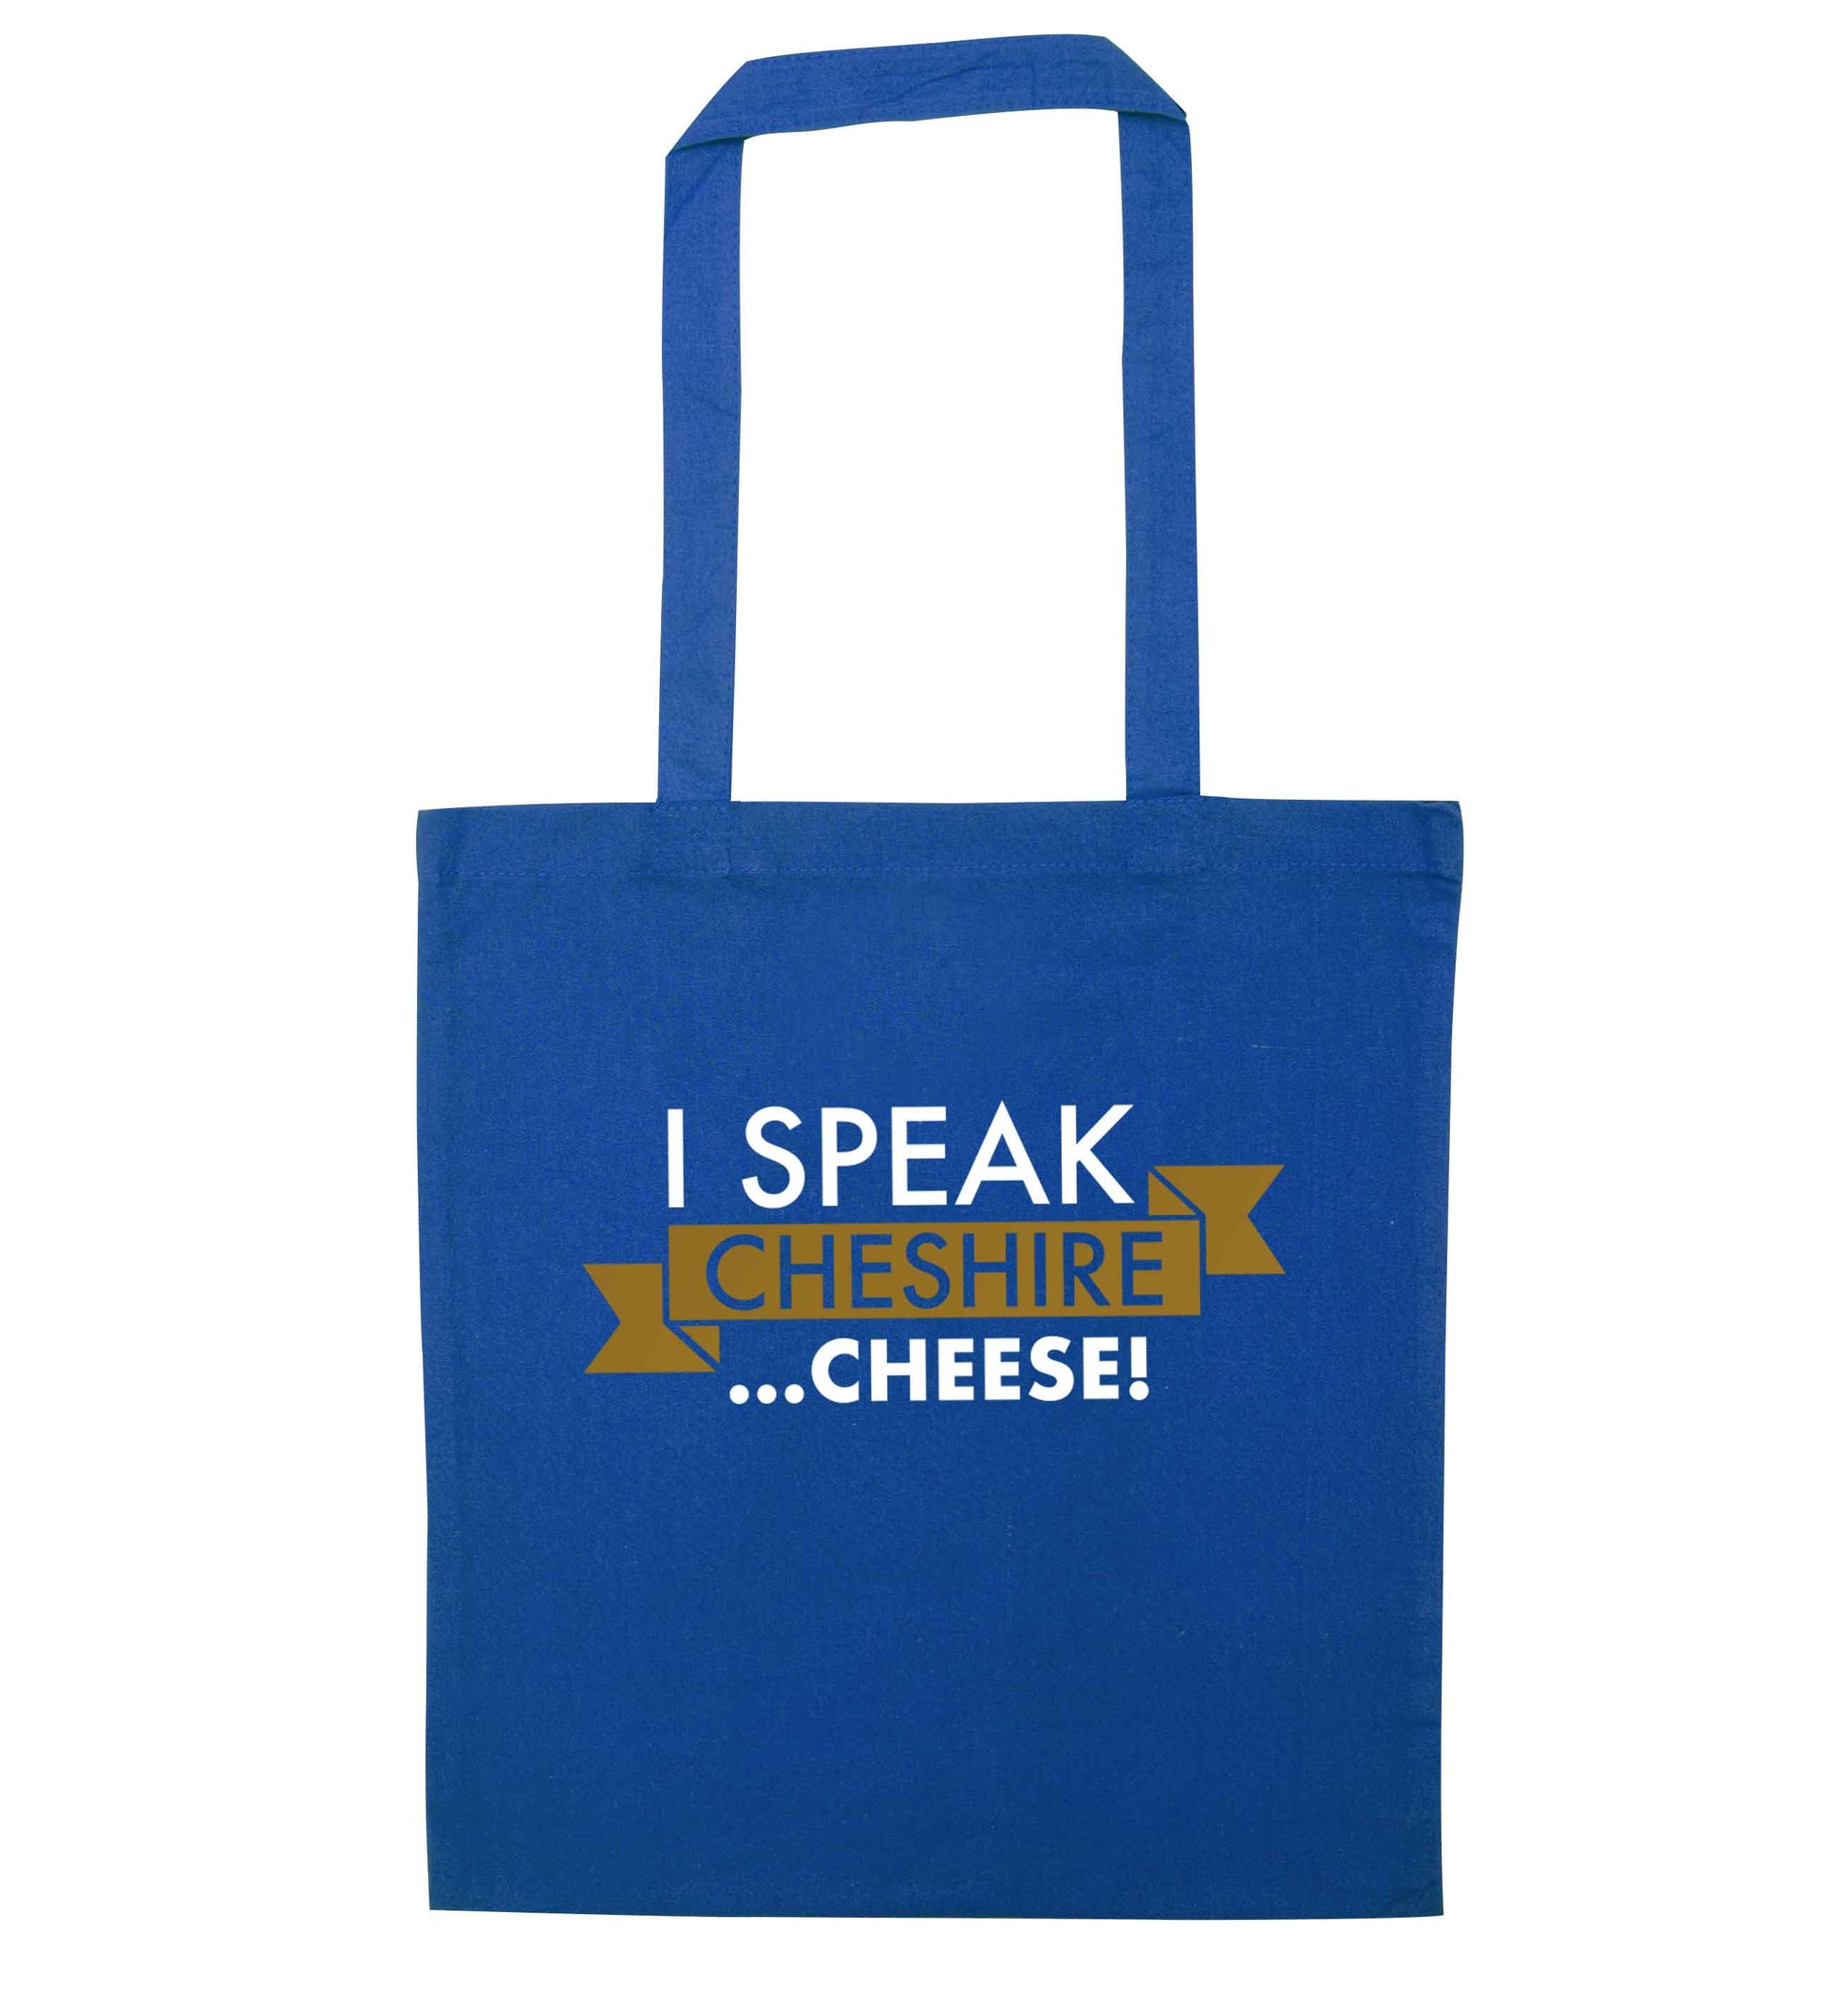 I speak Cheshire cheese blue tote bag